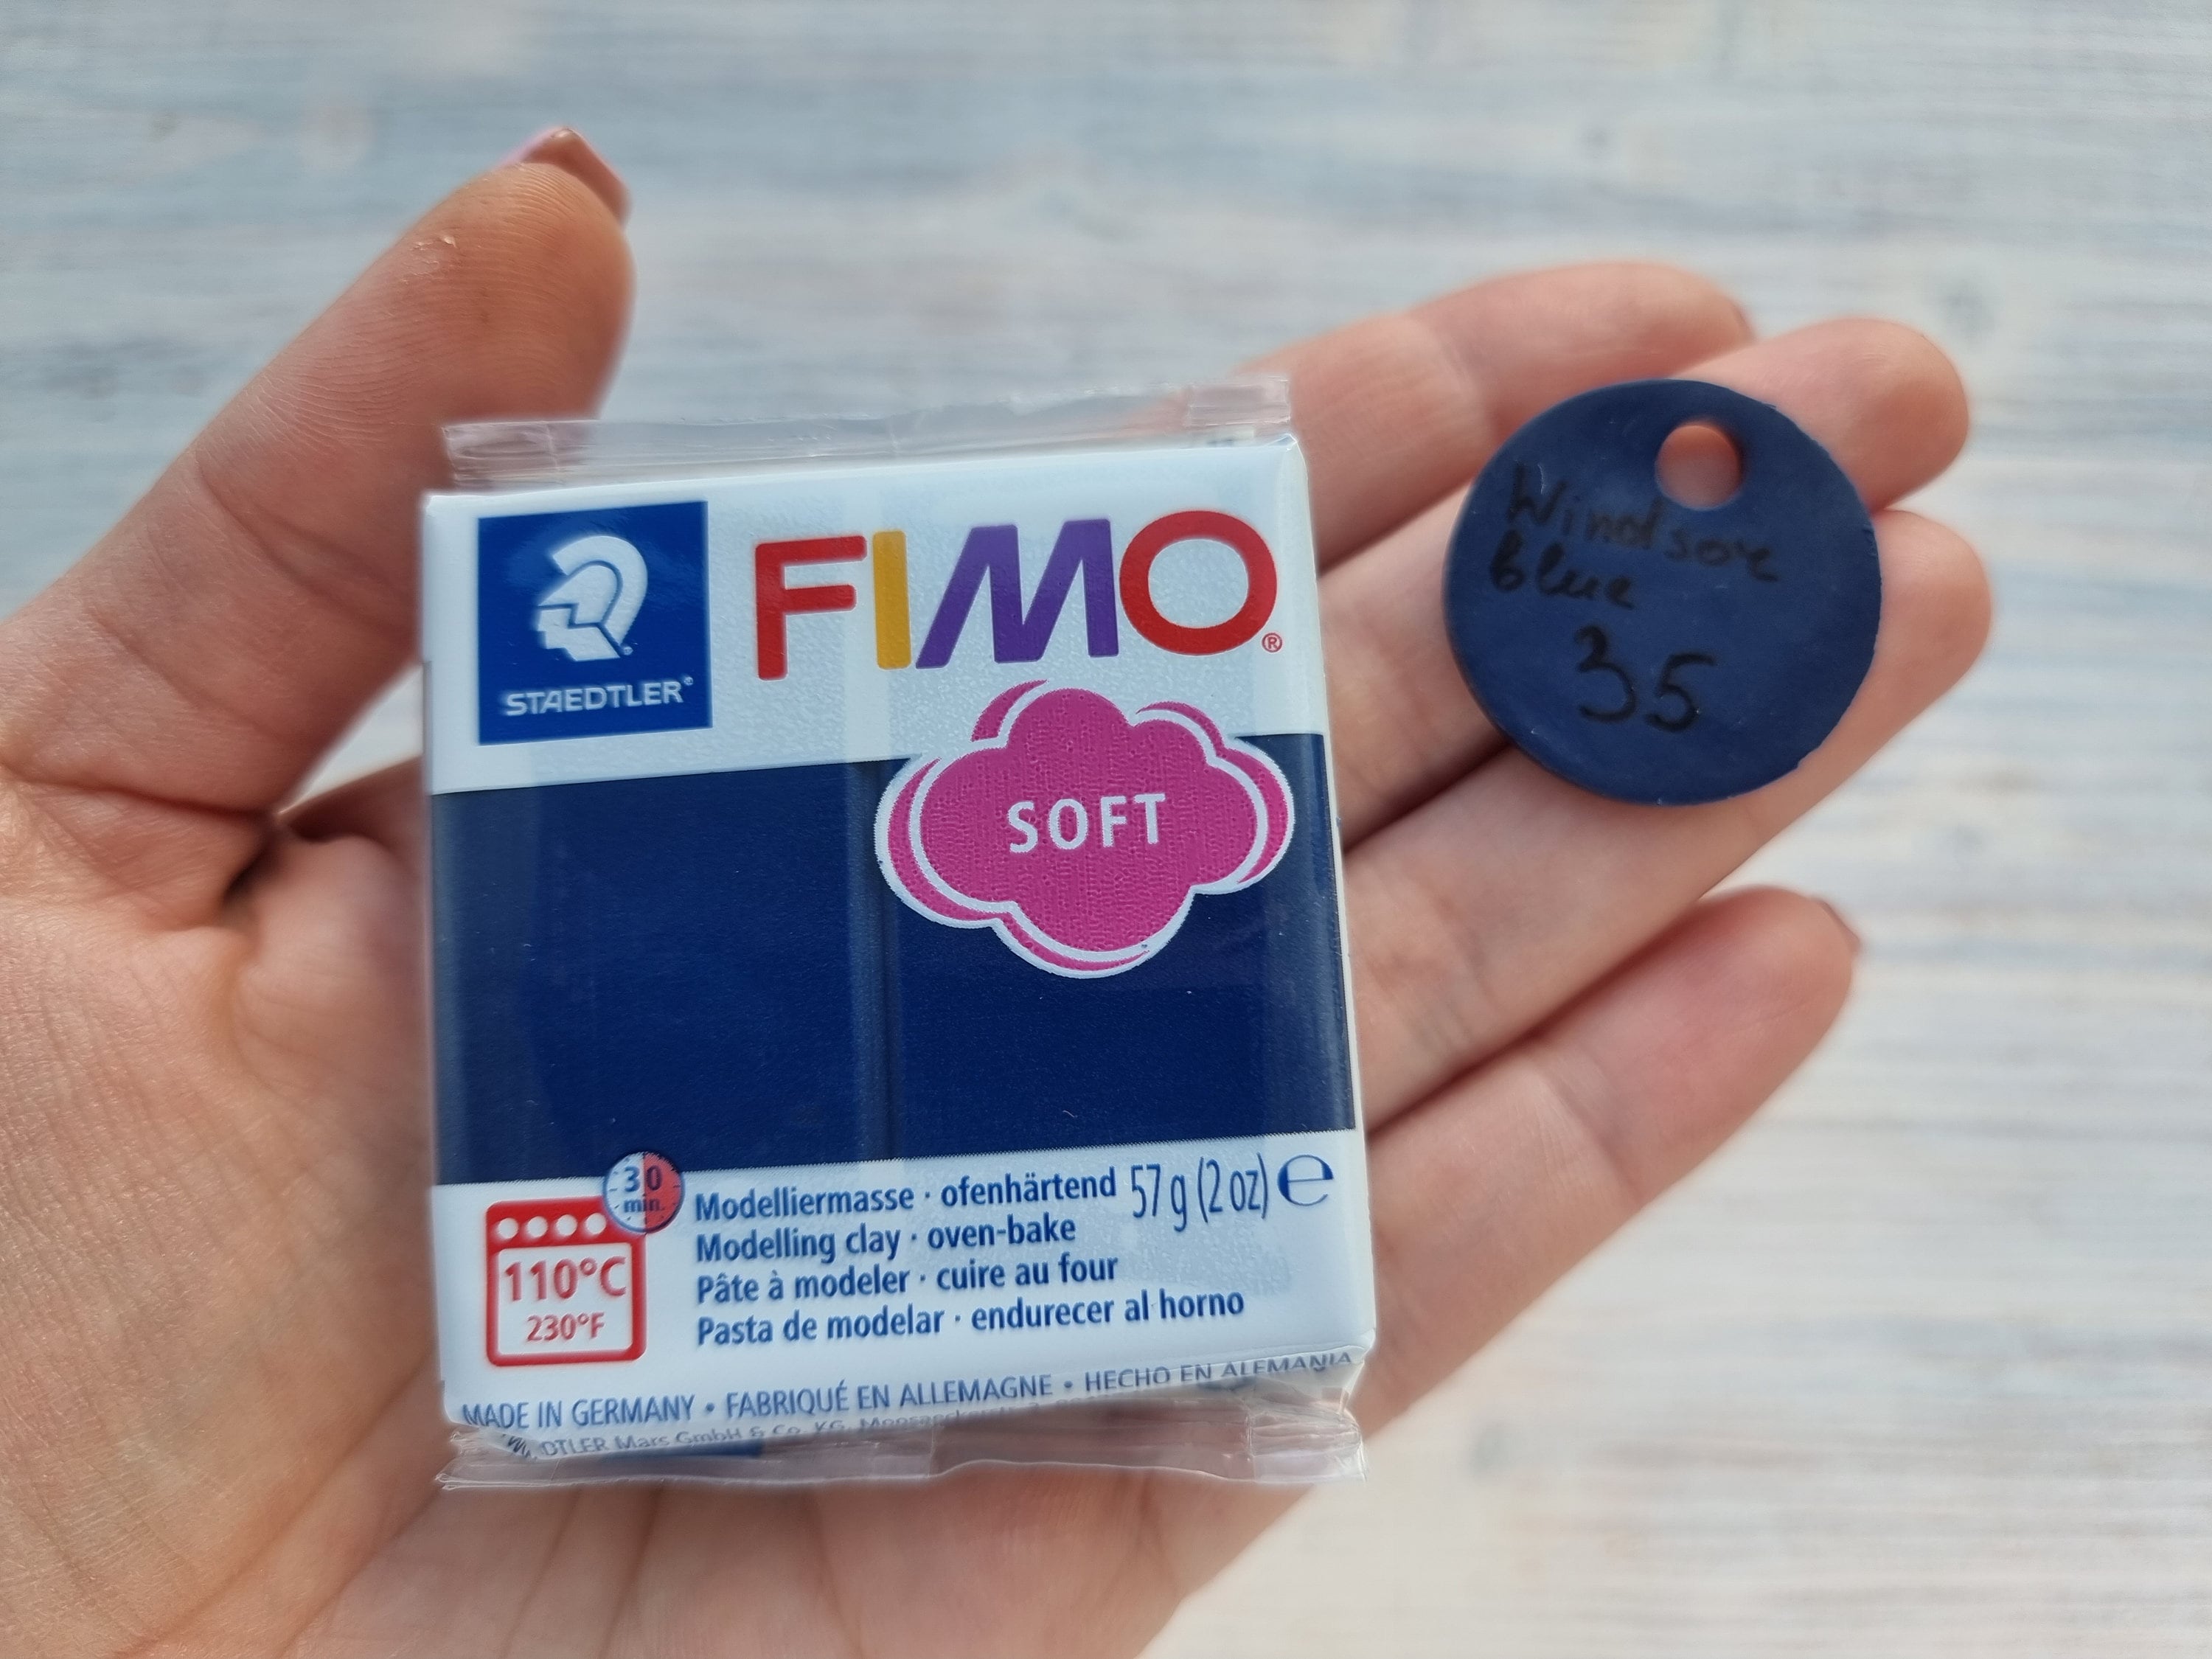 Pâte polymère série FIMO Soft, bleu windsor, Nr. 35, 57g 2oz, Pâte à  modeler polymère durcissant au four, Couleurs Basic Fimo Soft par STAEDTLER  -  France